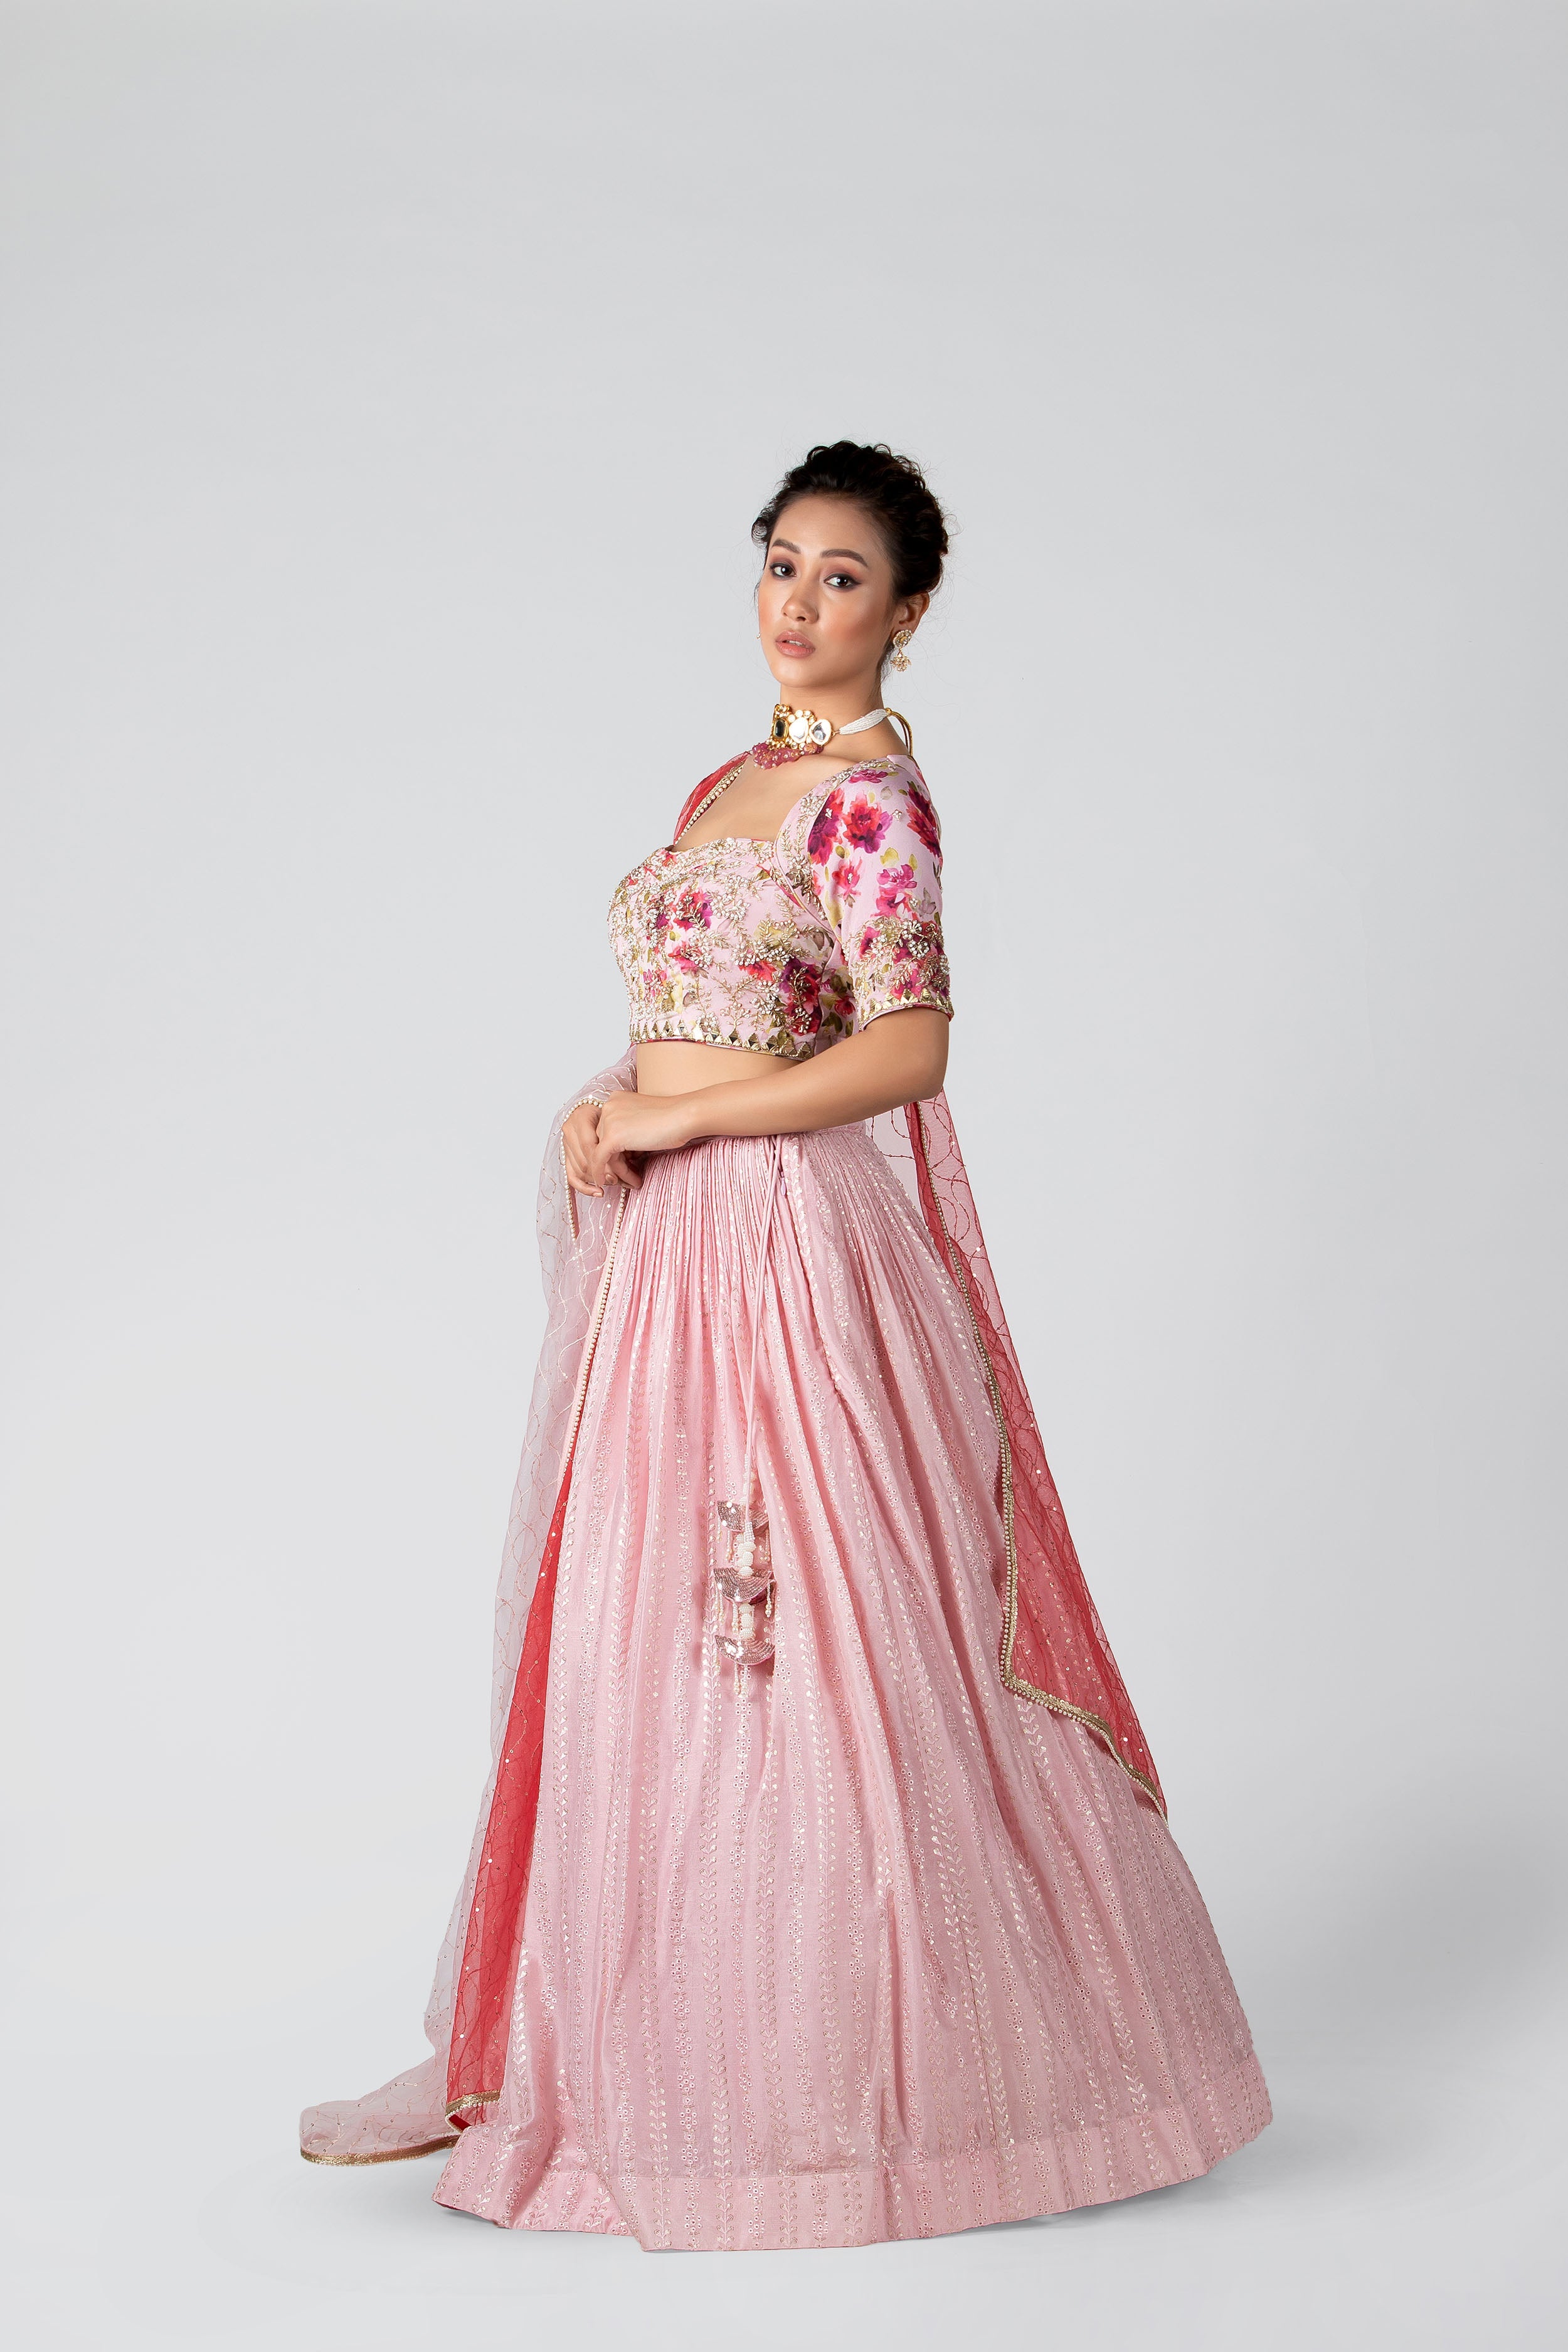 Suruchi Parakh - Blush Pink Embroidered Skirt Set